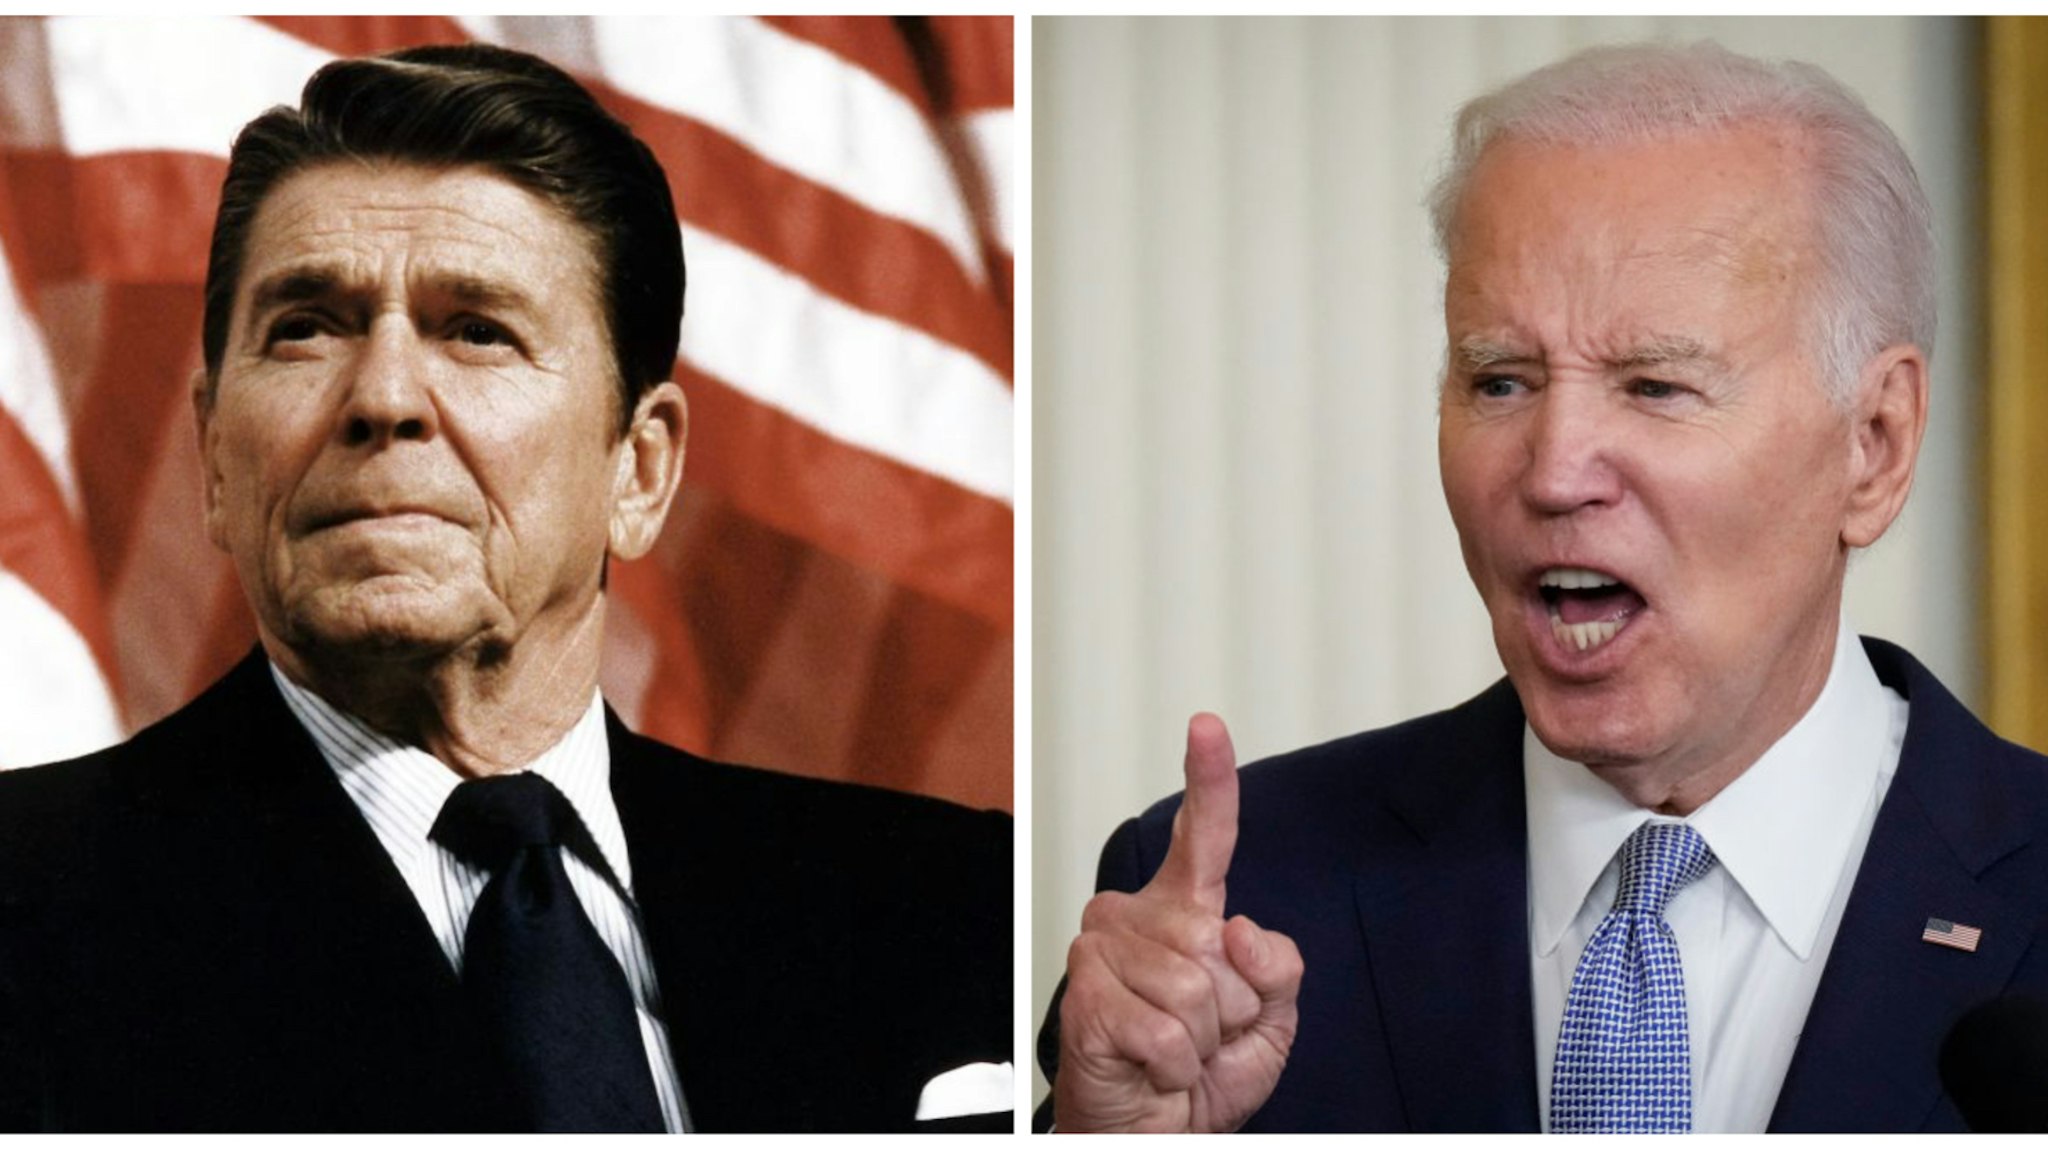 Reagan/Biden